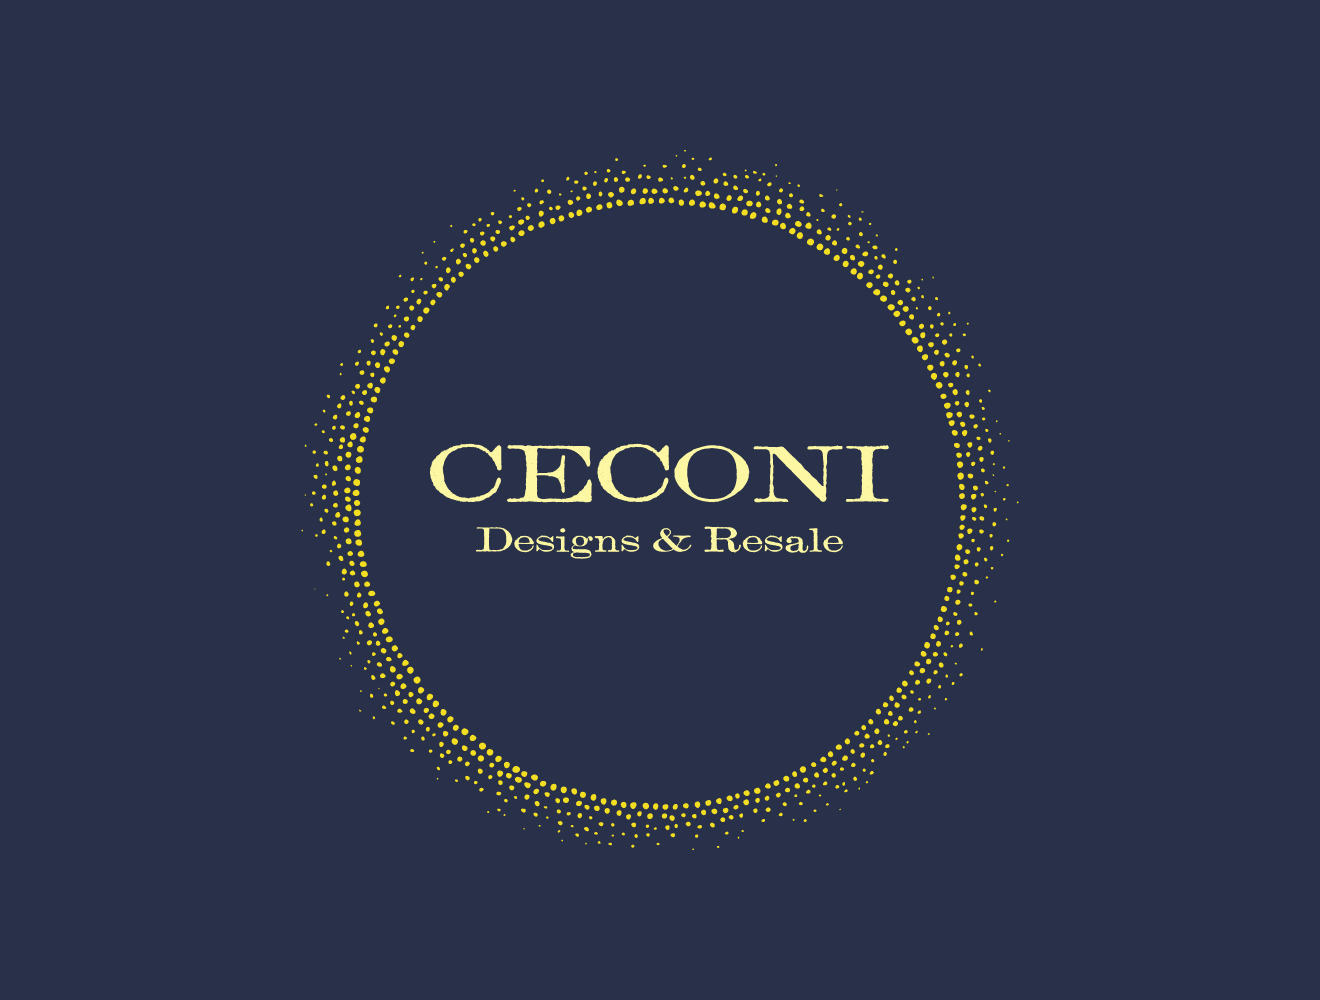 Ceconi Designs & Resale LLC | AuctionNinja